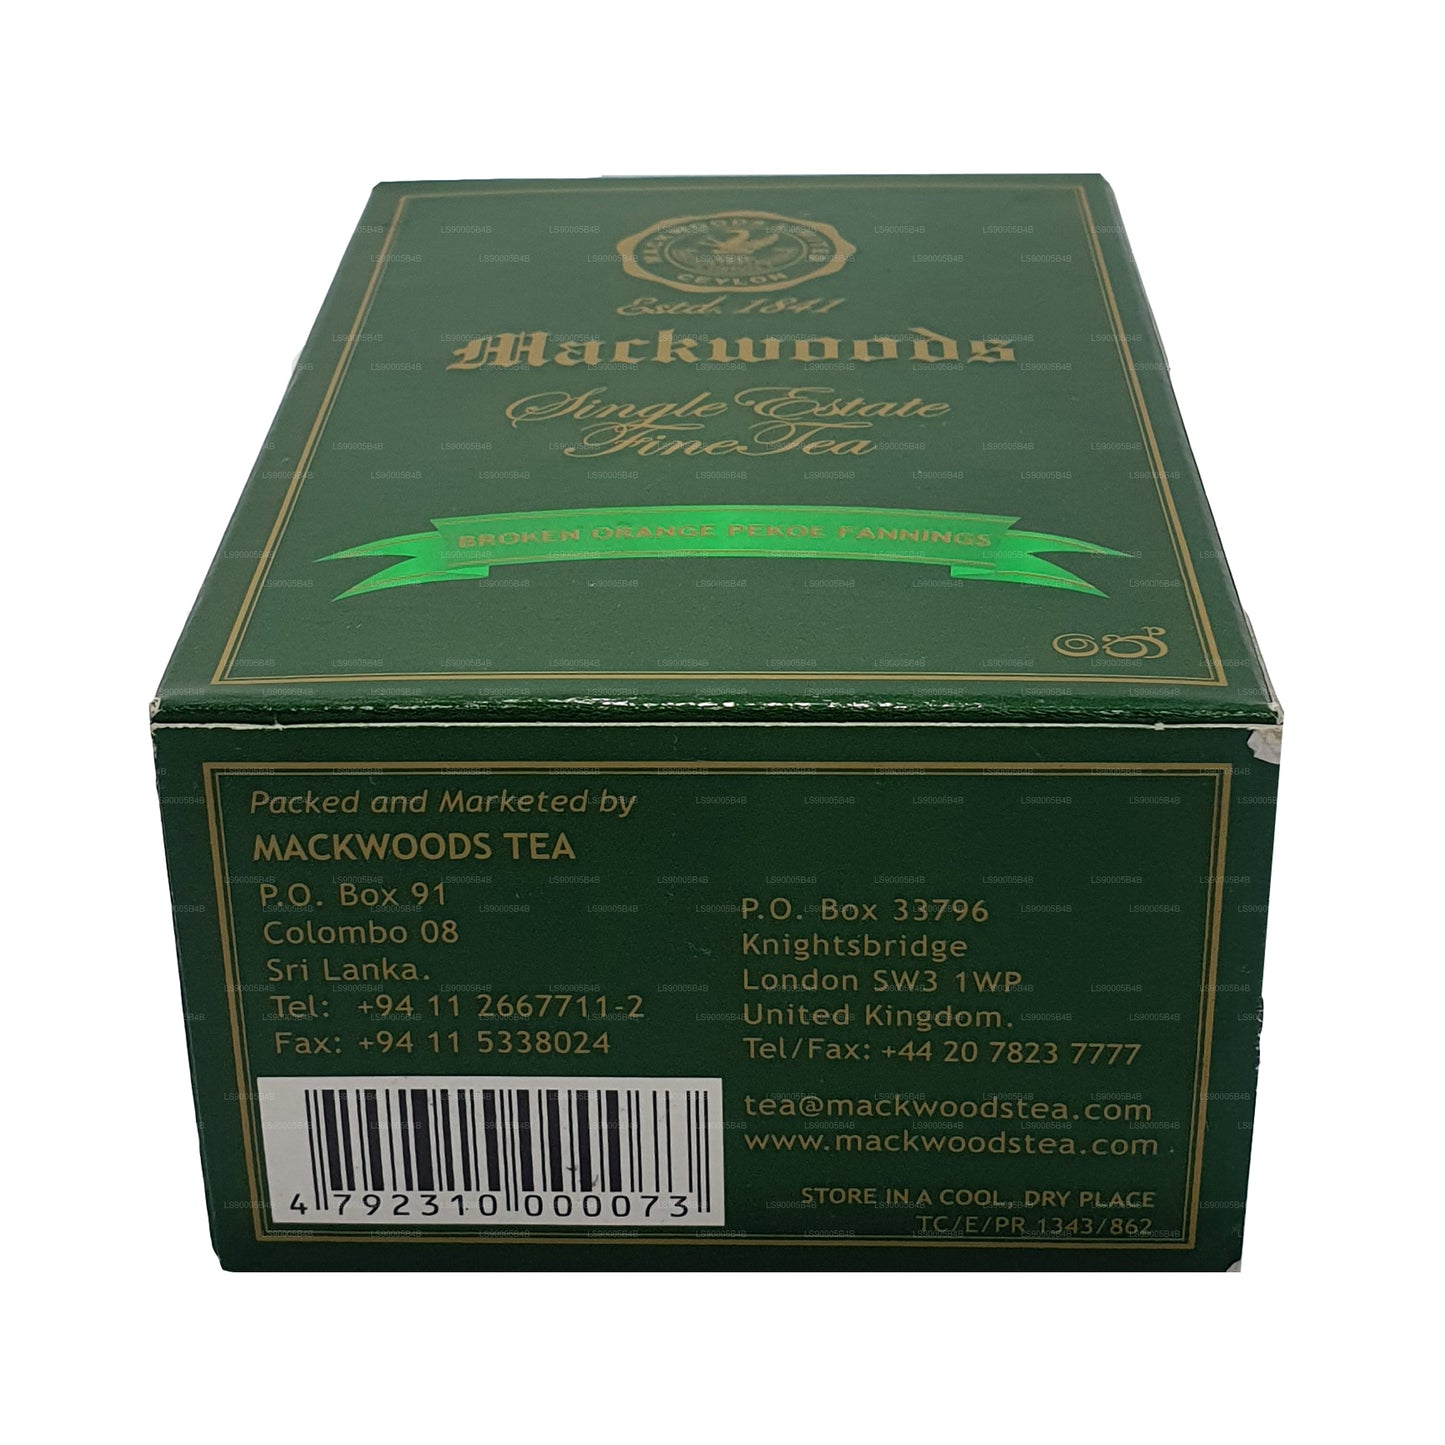 Mackwoods Single Estate Broken Orange Pekoe Fannings (BOPF) Ceylon zwarte thee met losse bladeren (200 g)